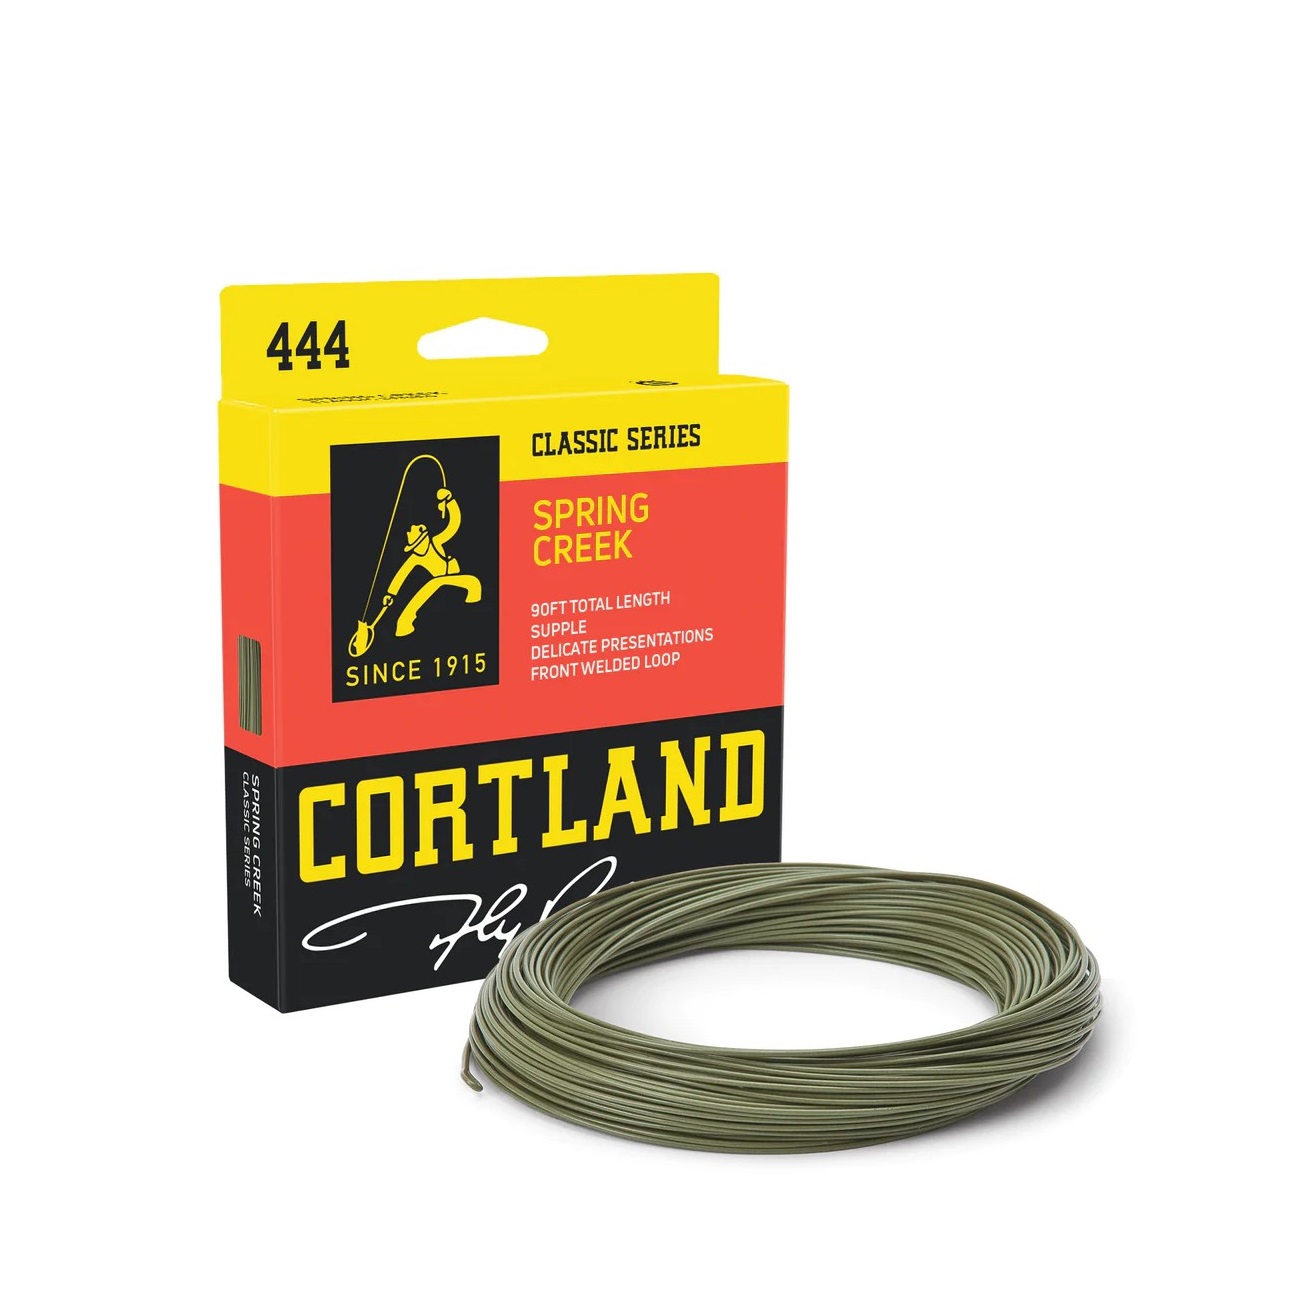 Cortland Cortland muškařská šnůra 444 Classic Spring Creek Olive Fresh|WF3F 90ft